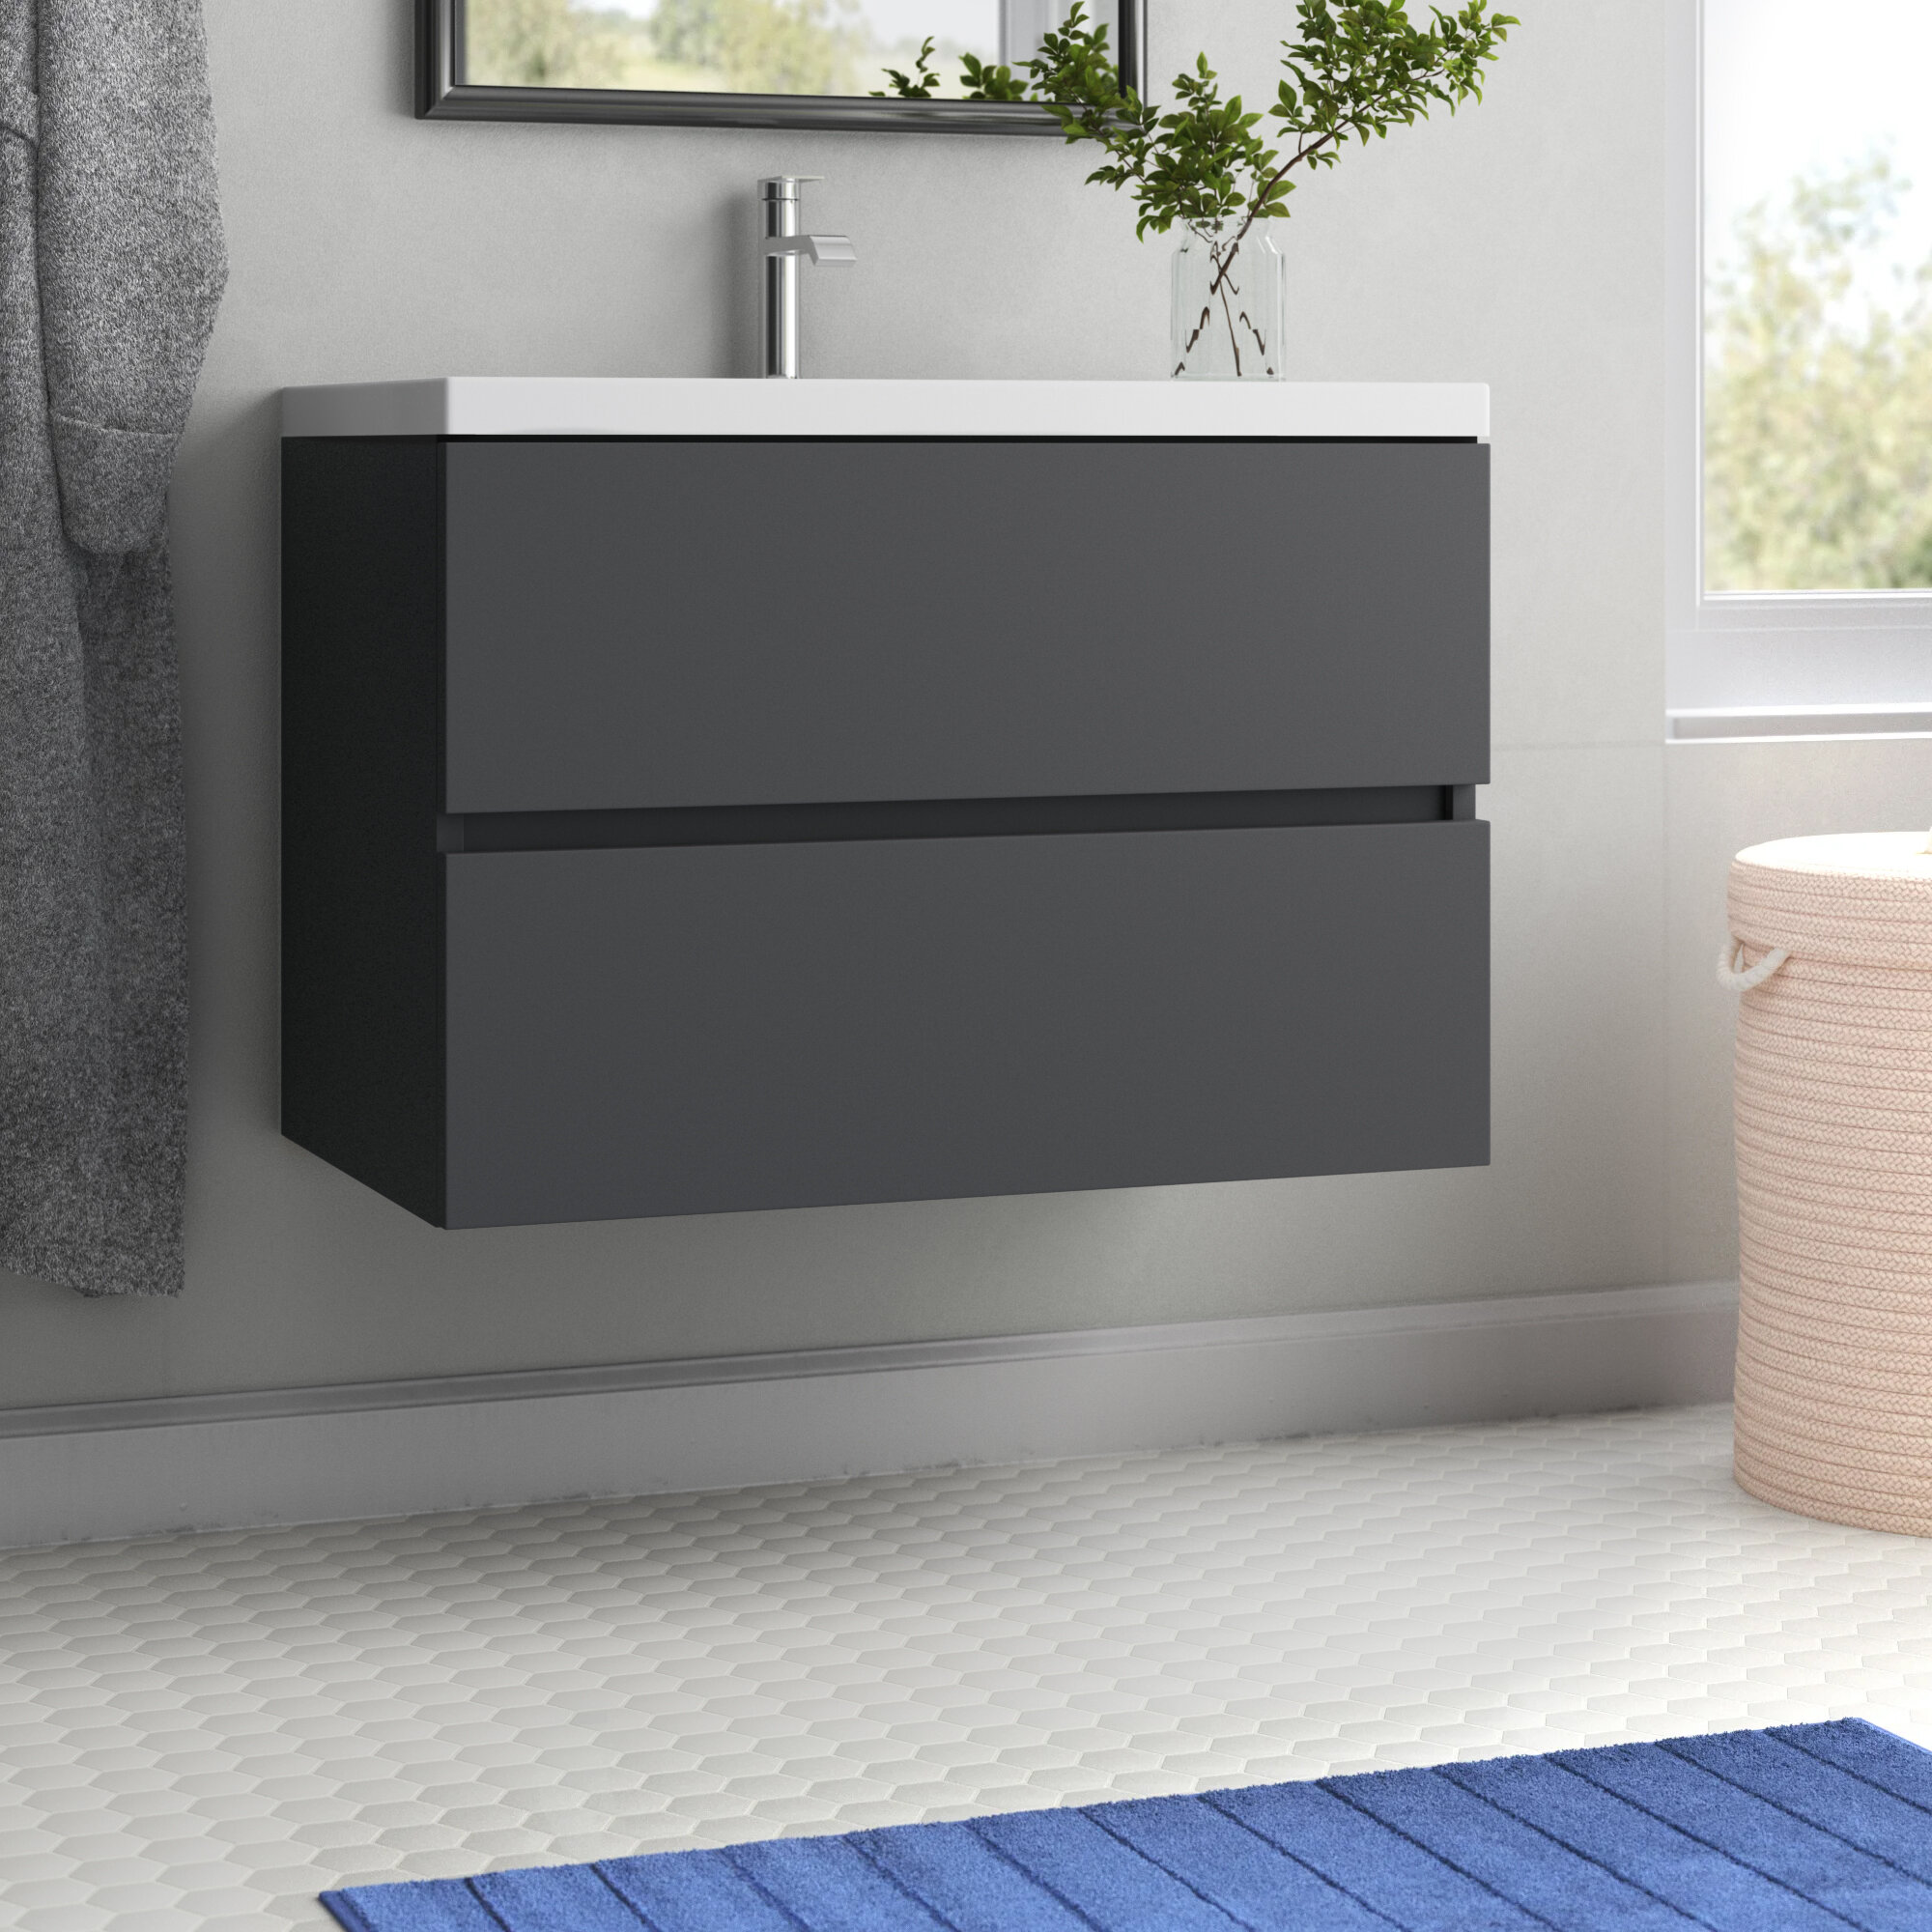 Zipcode Design Albion 31 Wall Mounted Single Bathroom Vanity Set Reviews Wayfair